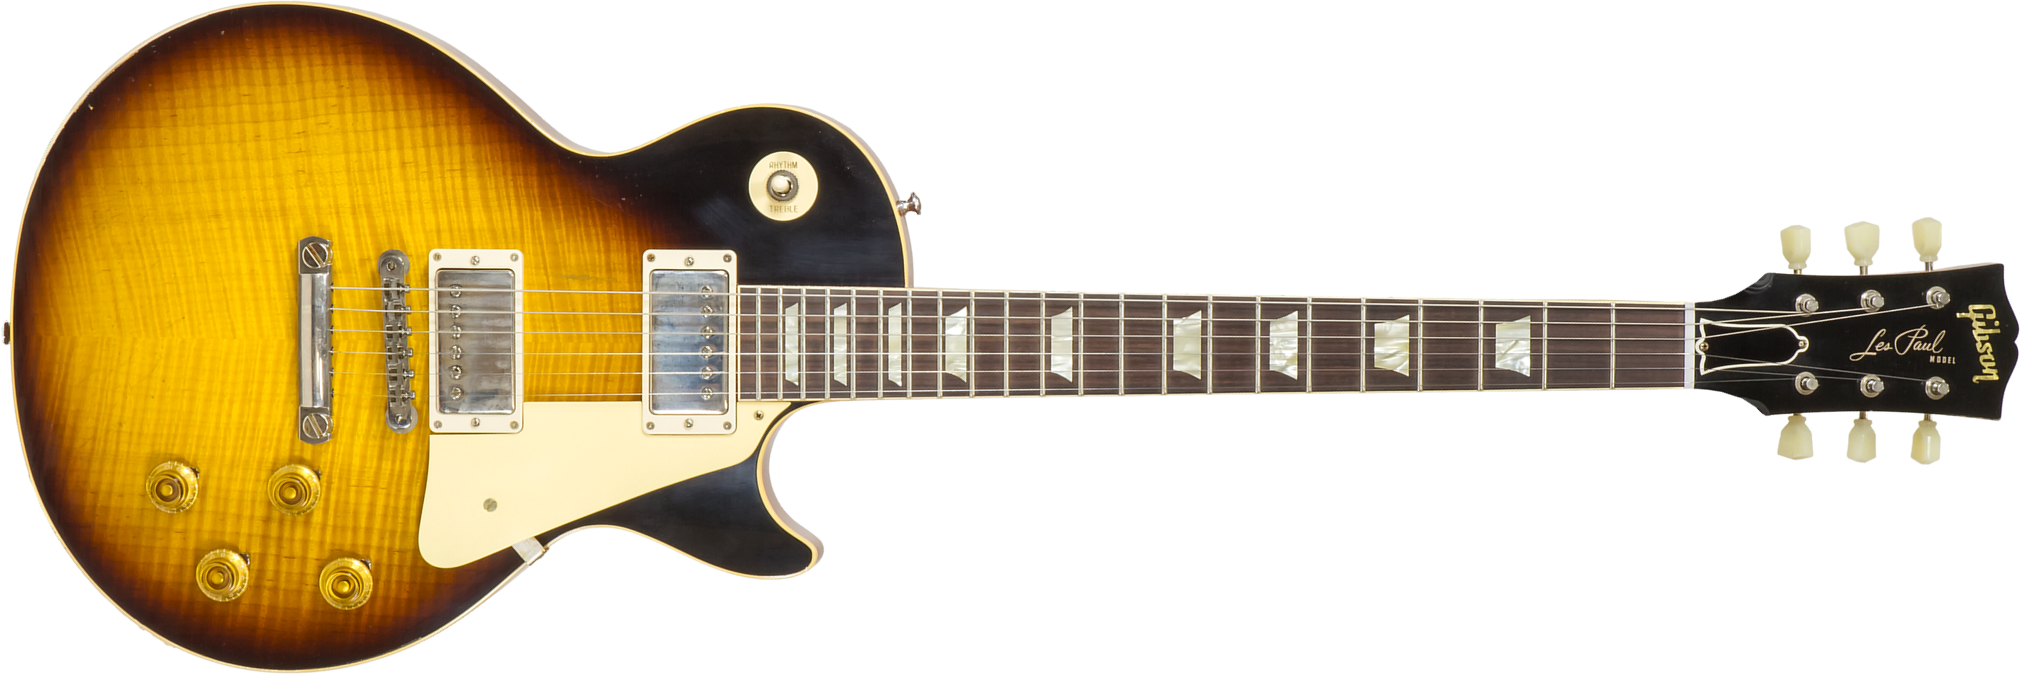 Gibson Custom Shop M2m Les Paul Standard 1959 2h Ht Rw #932131 - Murphy Lab Light Aged Kindred Burst - Enkel gesneden elektrische gitaar - Main pictur